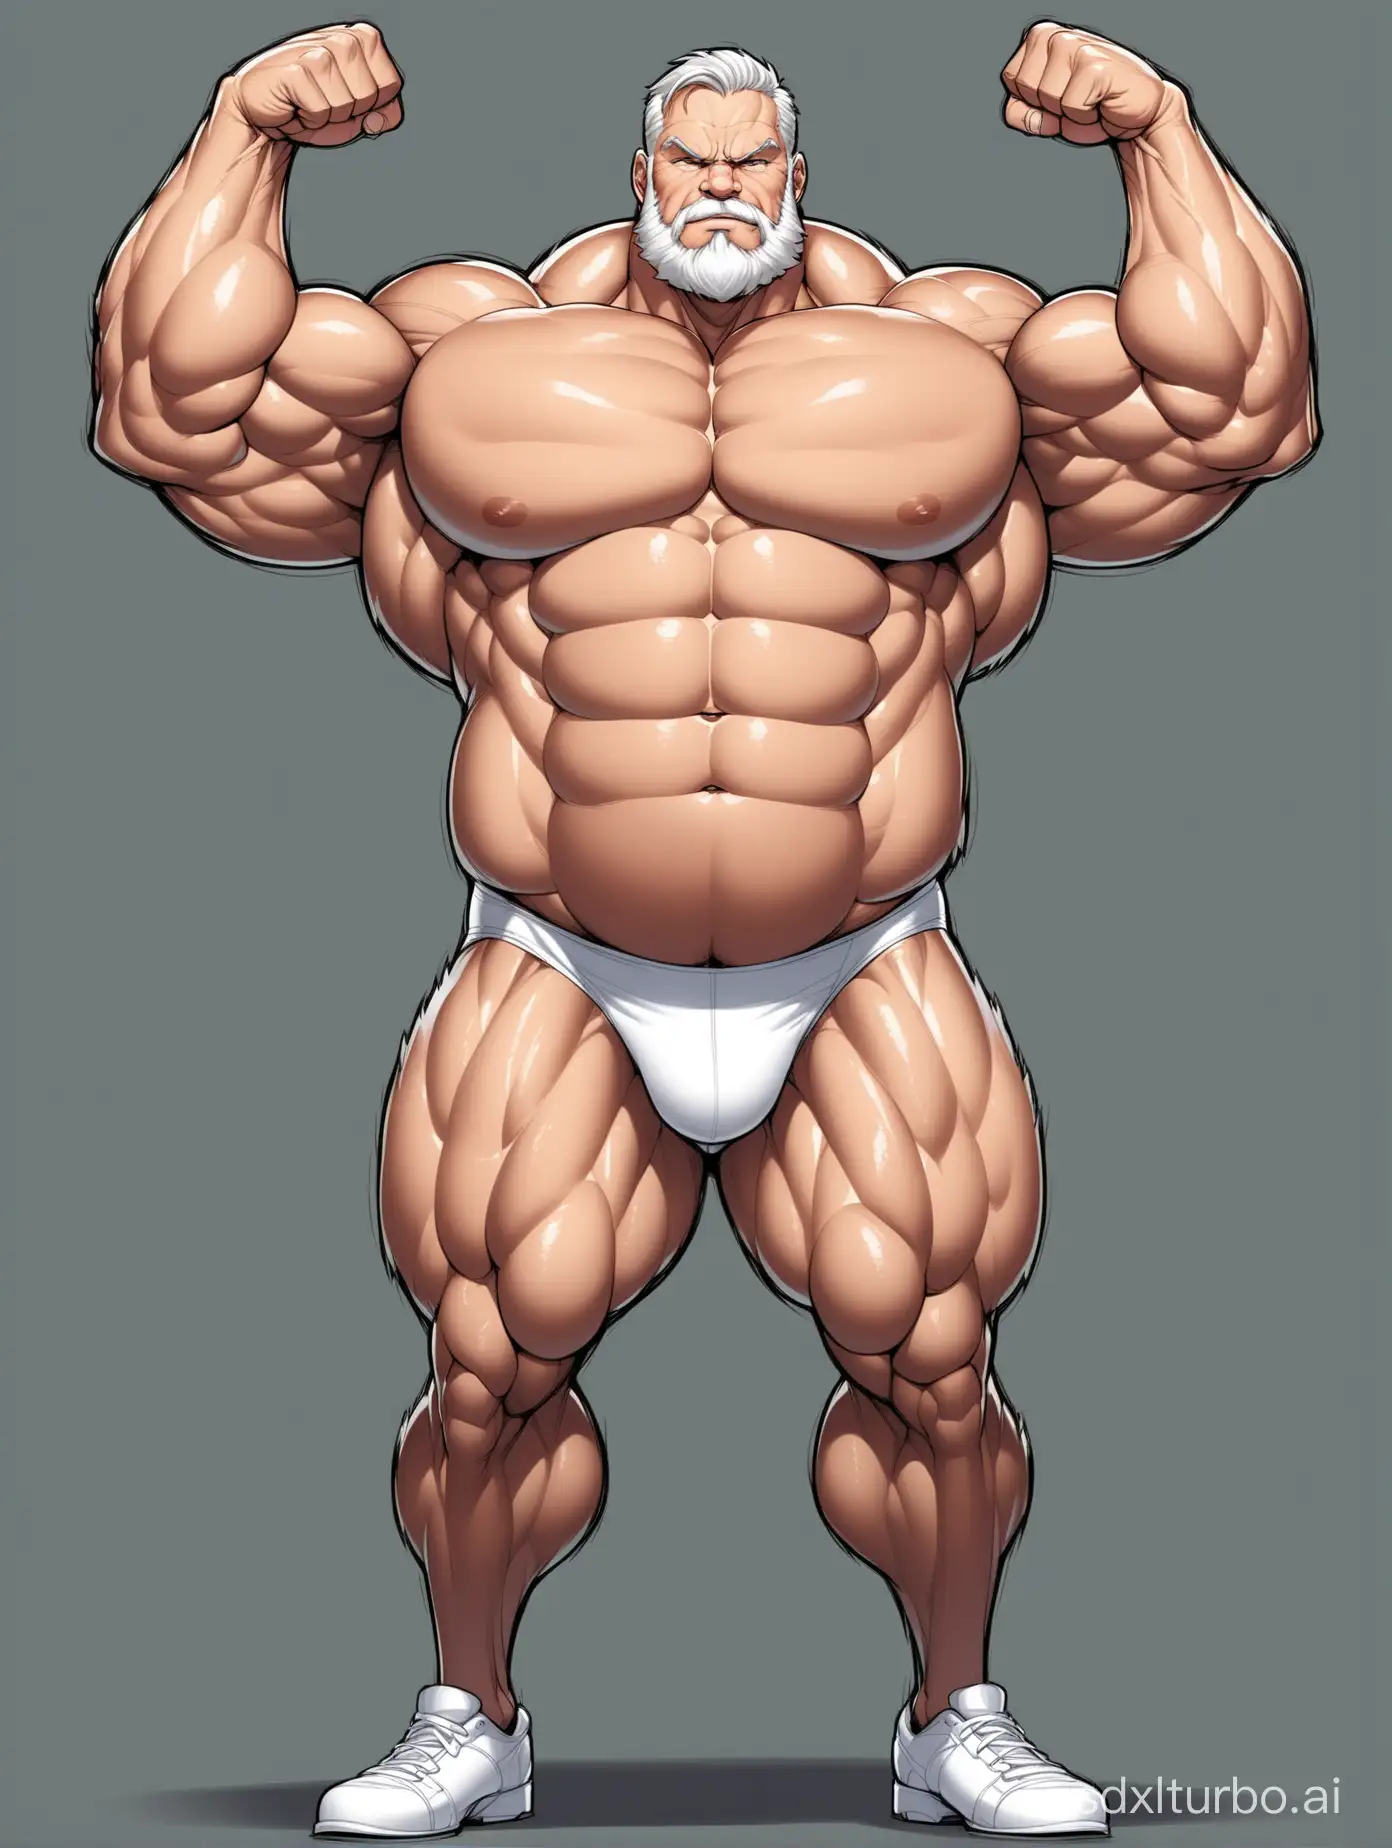 Massive-Muscle-Stud-Showing-Biceps-in-White-Underwear